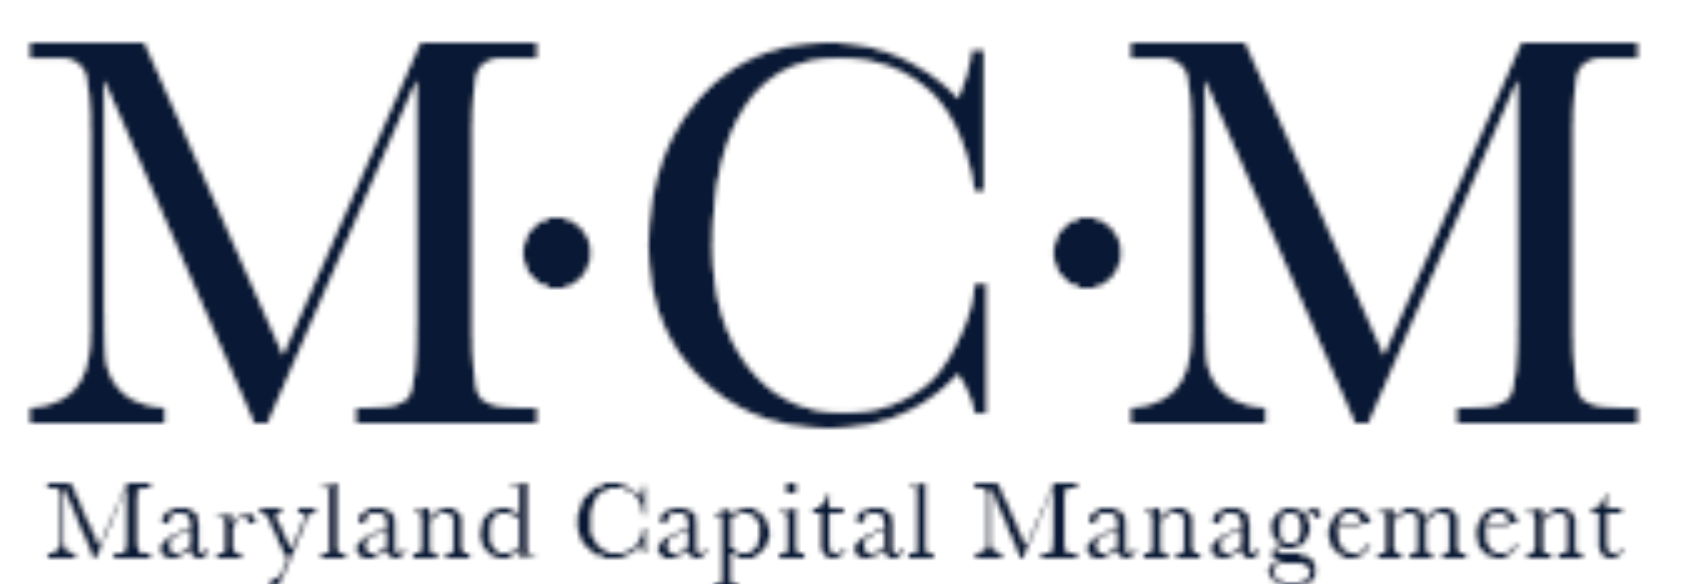 Maryland Capital // Cerity Partners